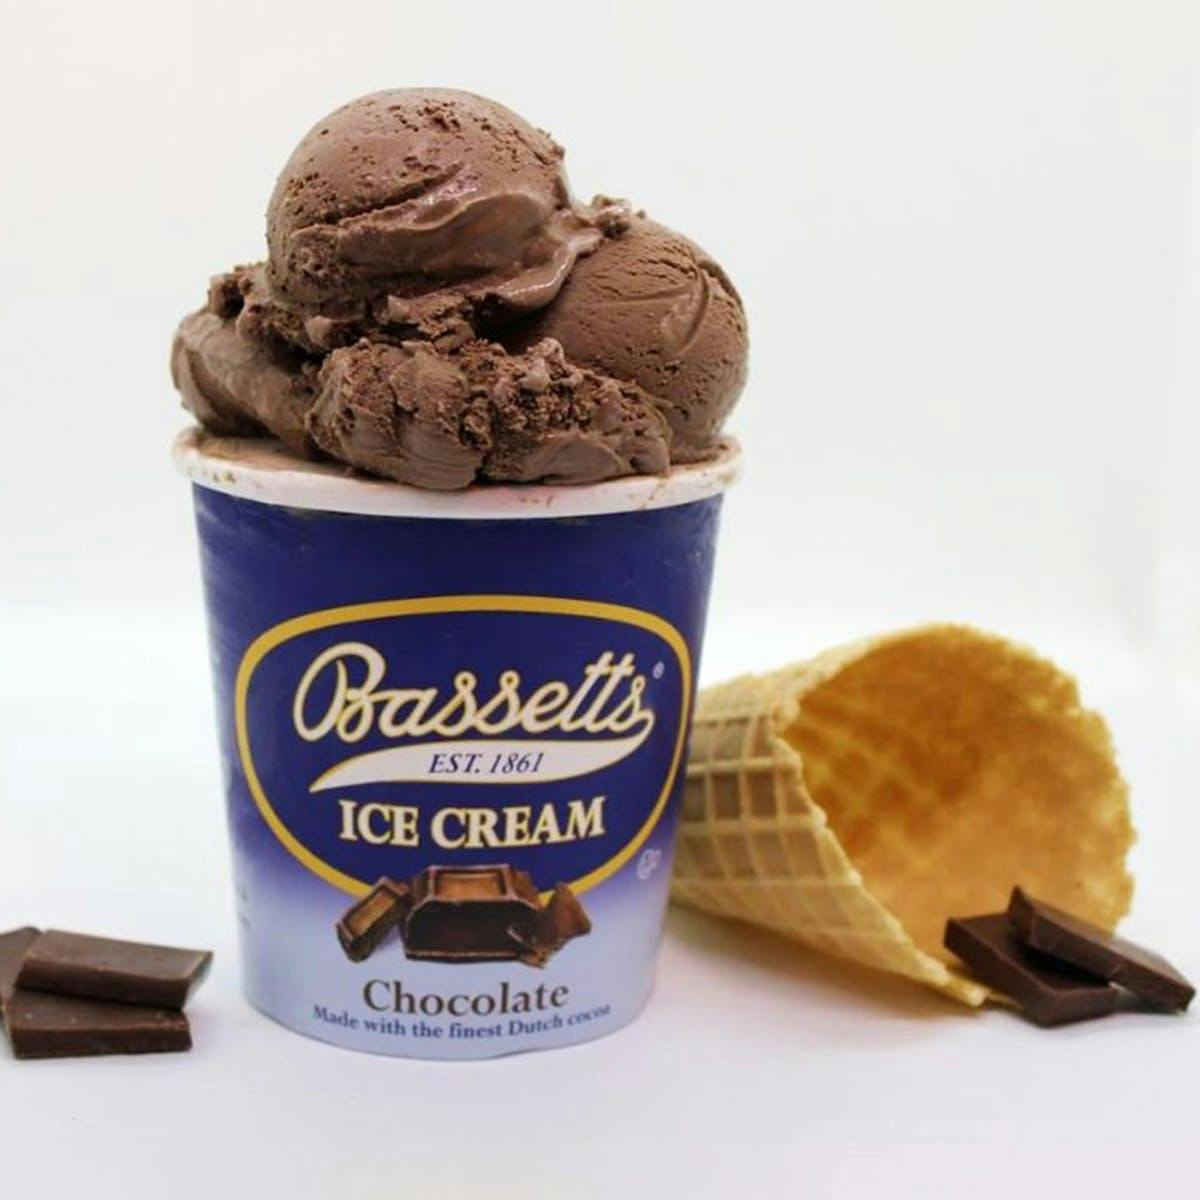 Chocolate Ice Cream 6 Pints by Bassetts Ice Cream